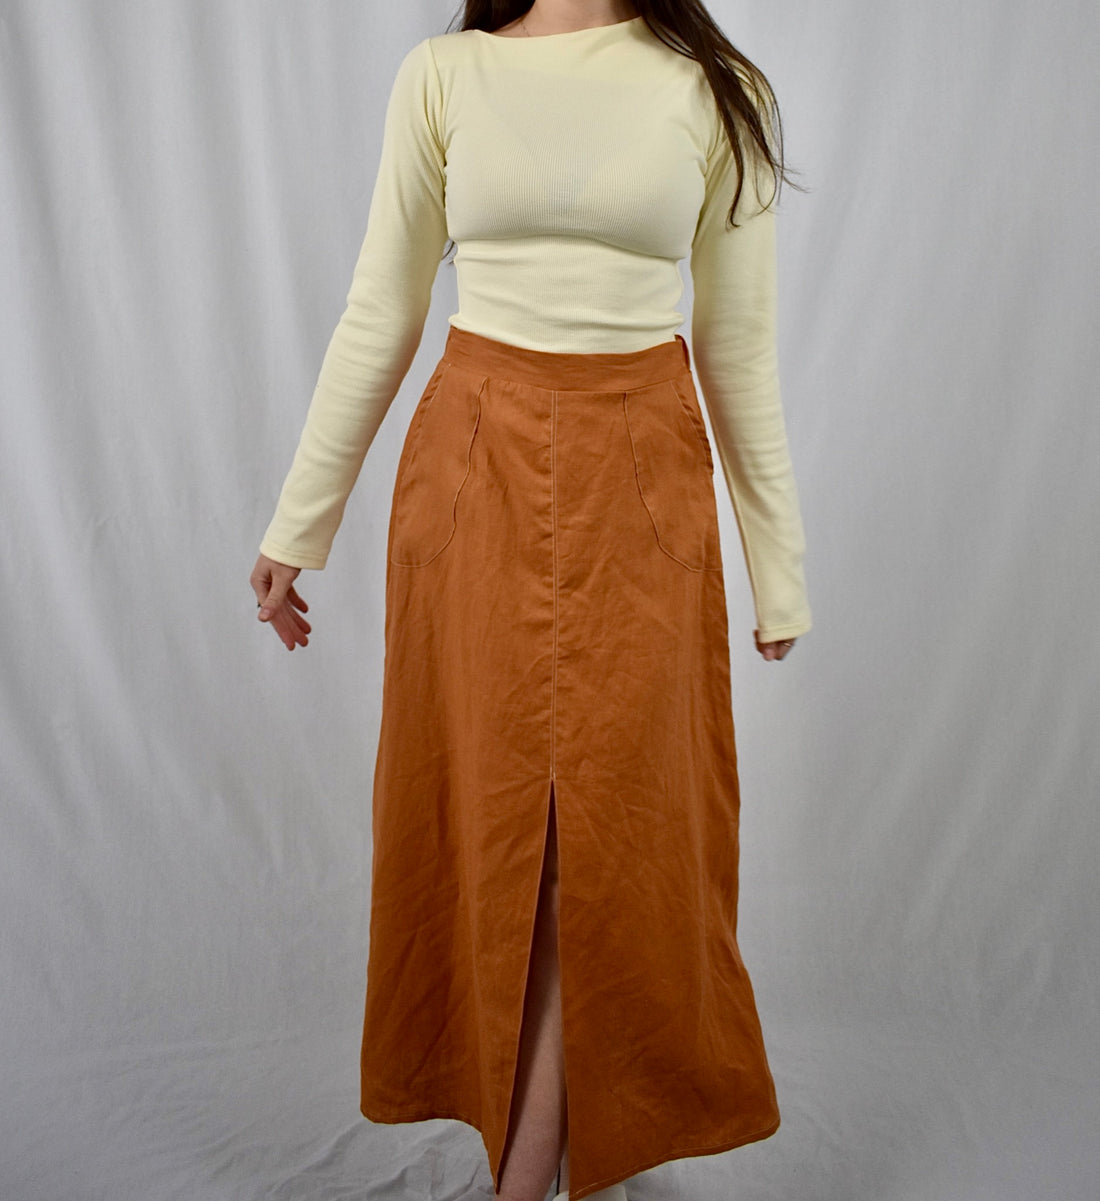 Kate front split skirt - Rusty brown